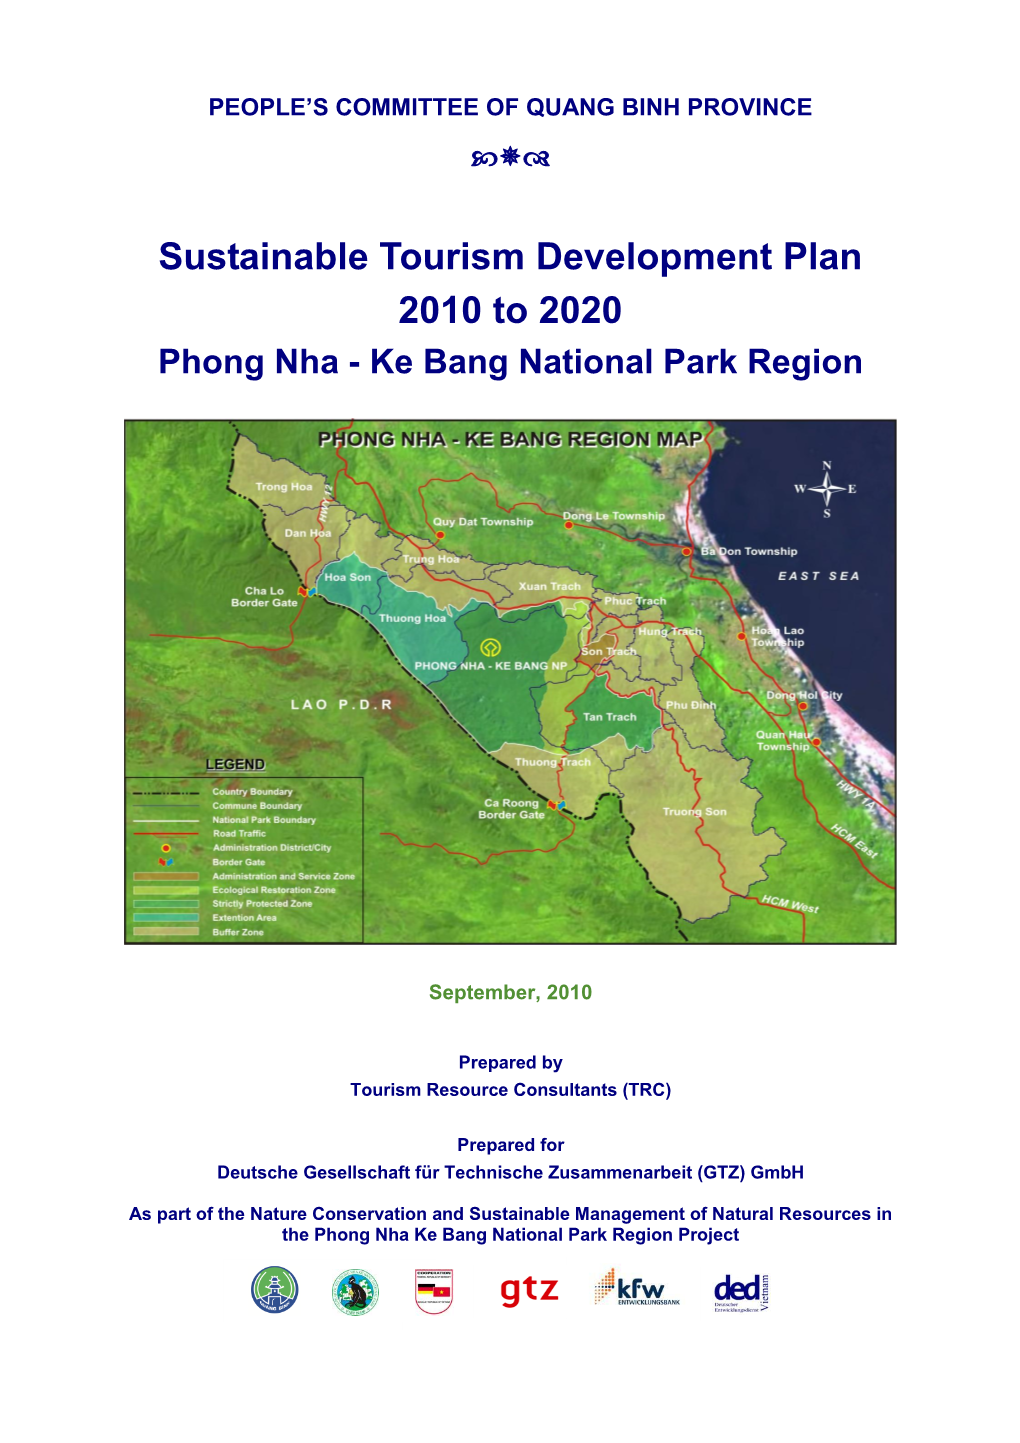 Sustainable Tourism Development Plan 2010 to 2020 Phong Nha - Ke Bang National Park Region